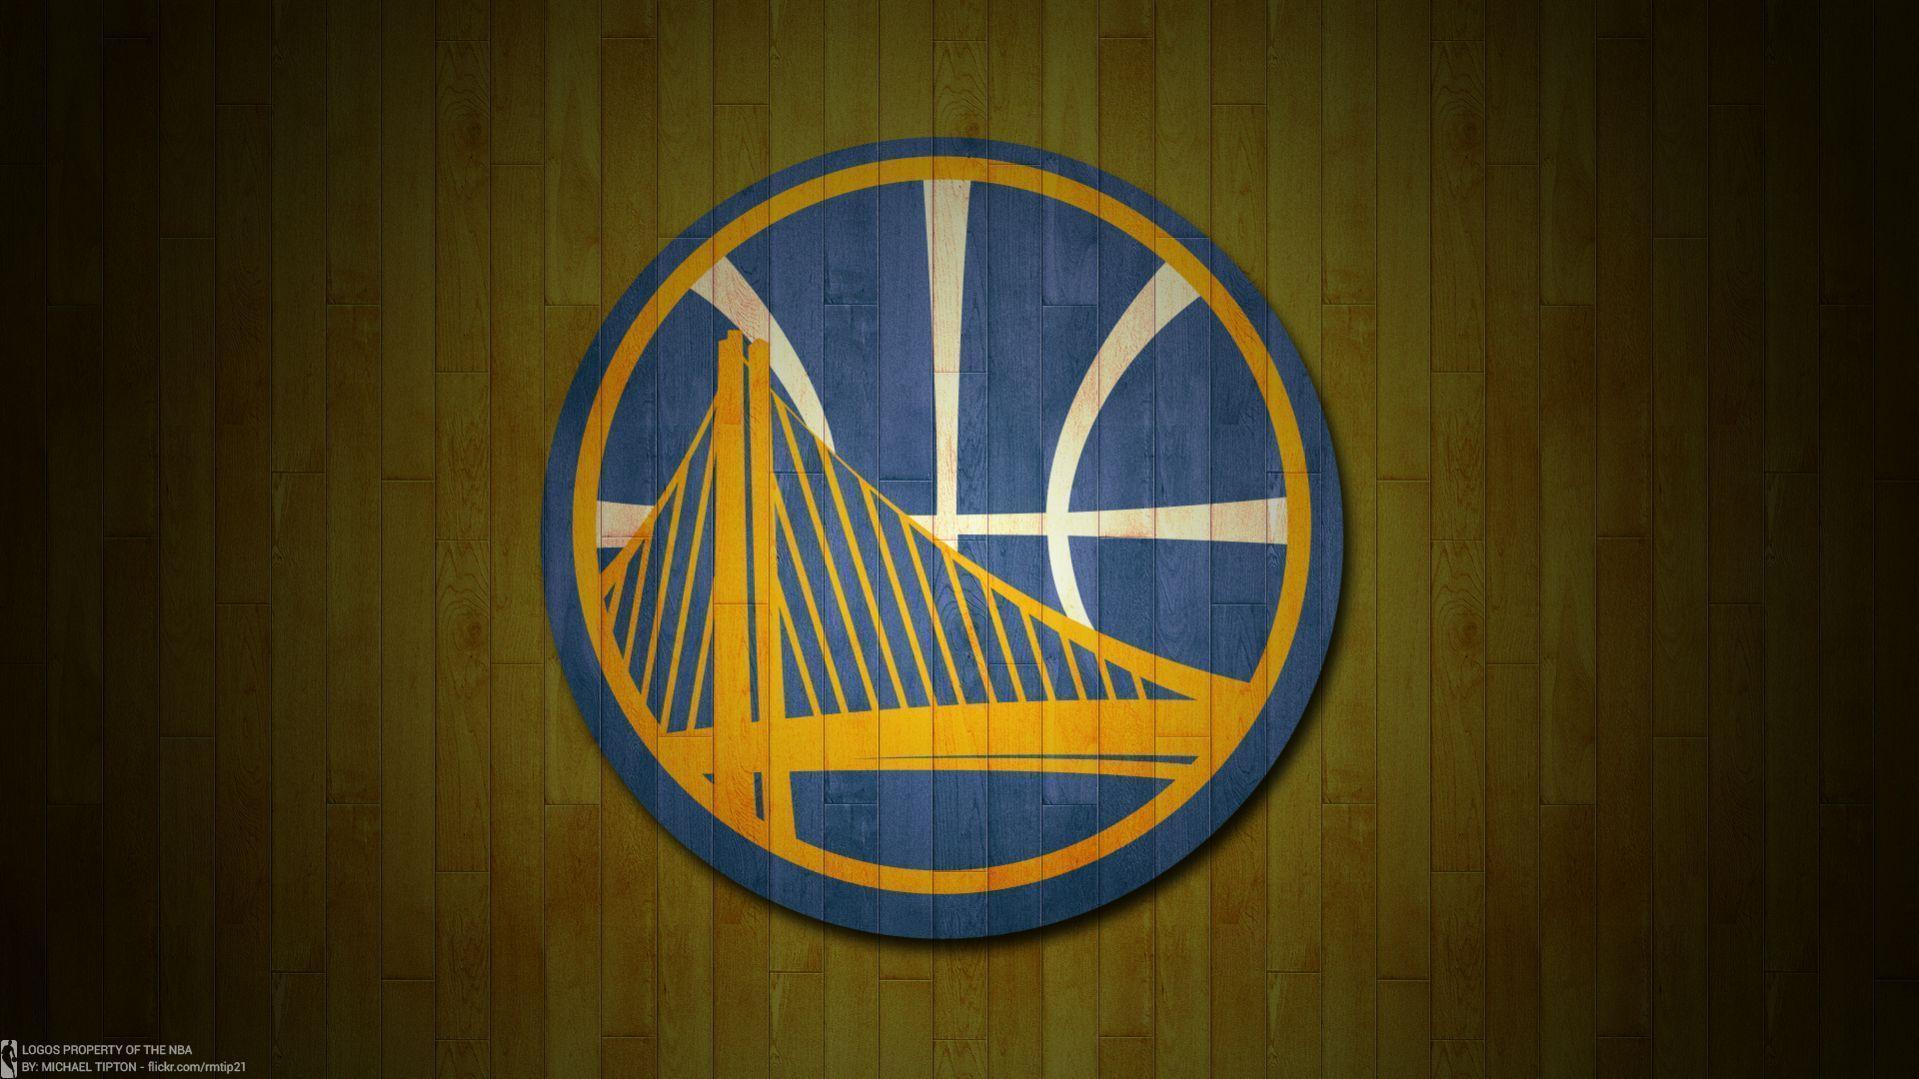 What NBA wallpaper do you use?